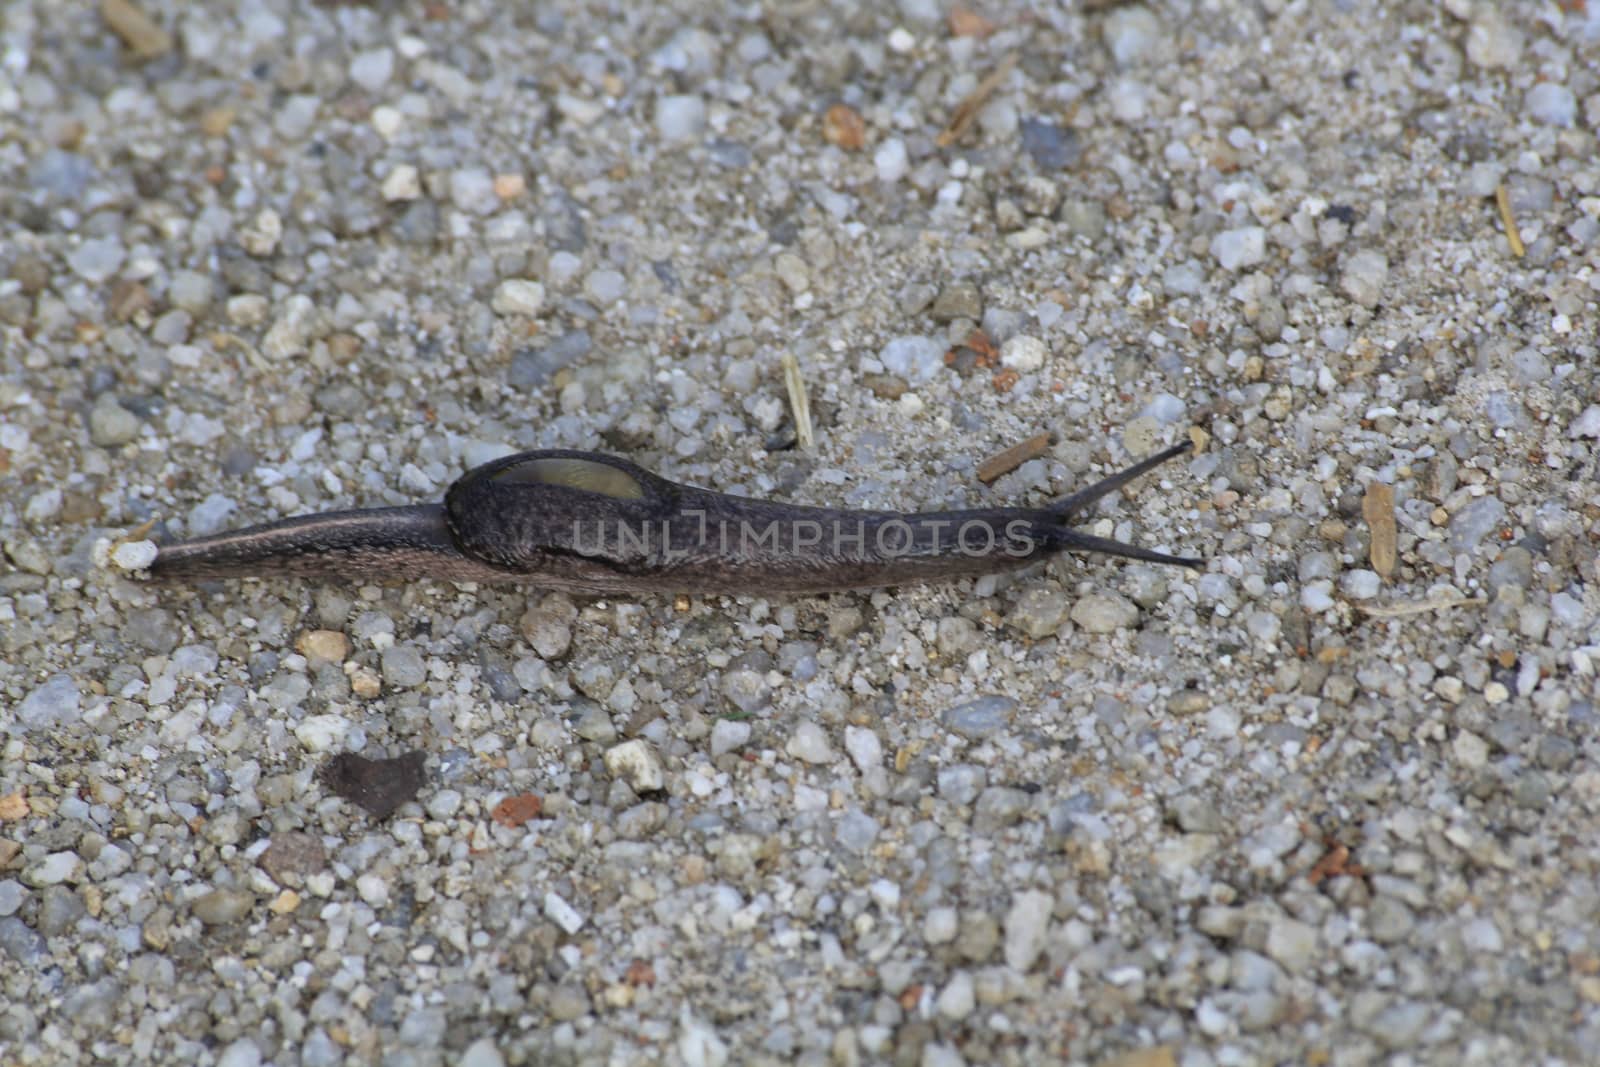 The slug is slowly crawling through the sand ground.